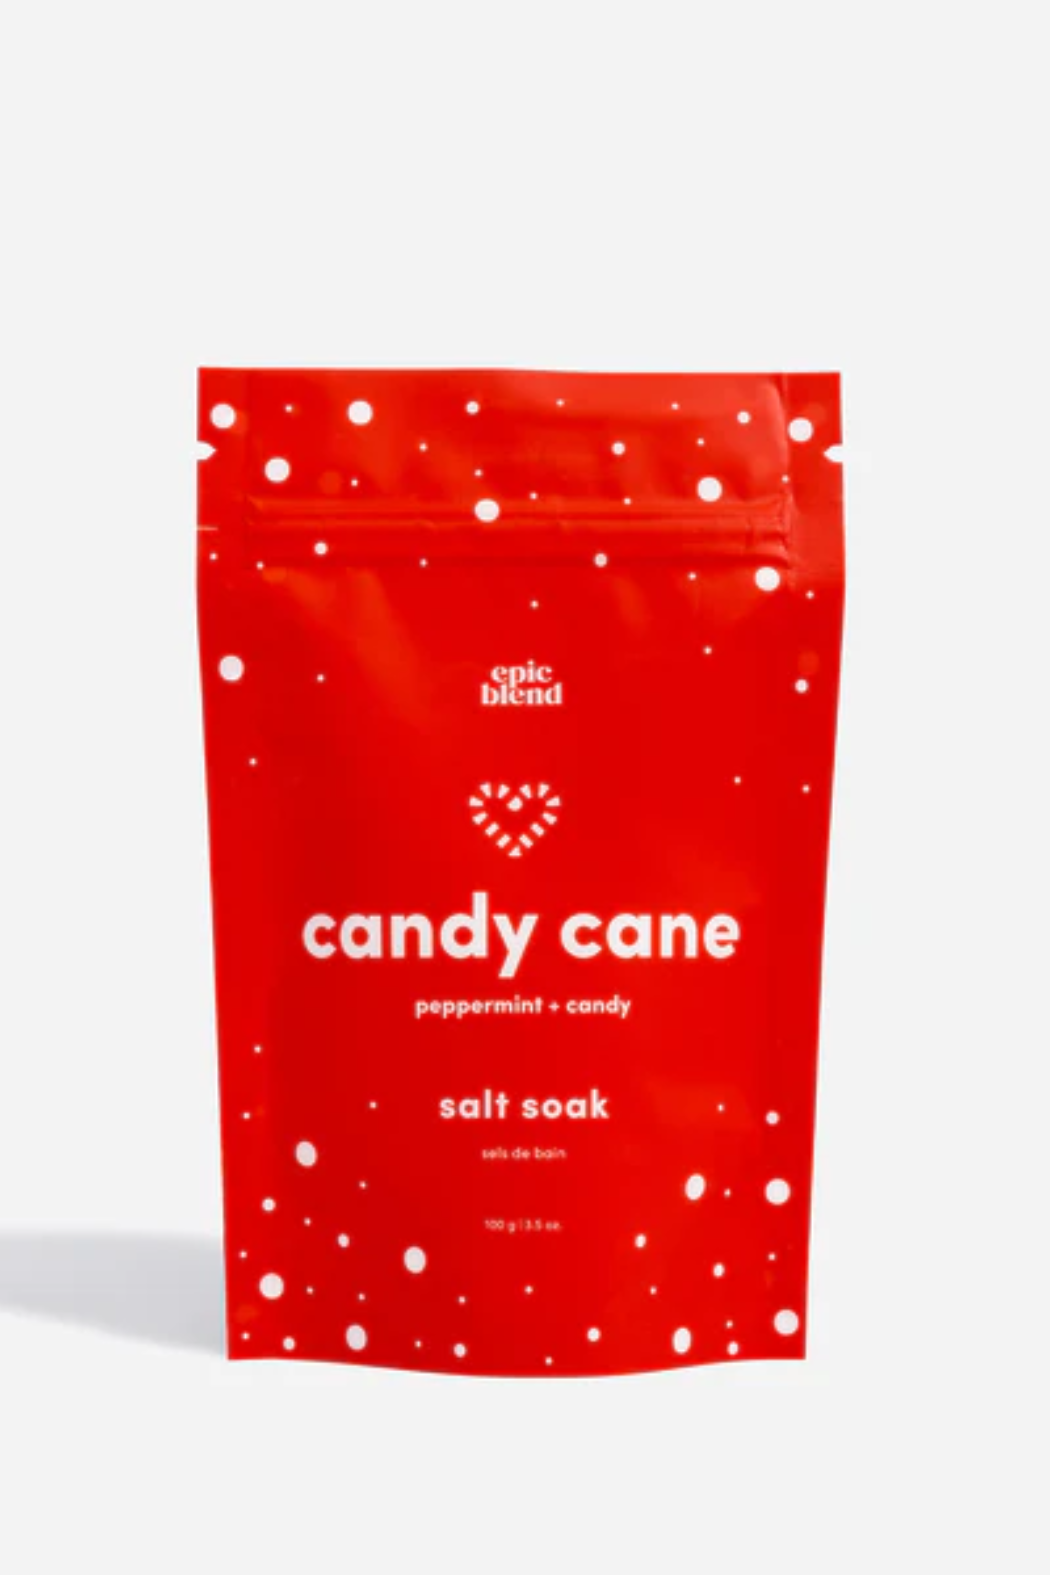 Candy Cane Salt Soak 100g / 3.5oz | Epic Blend